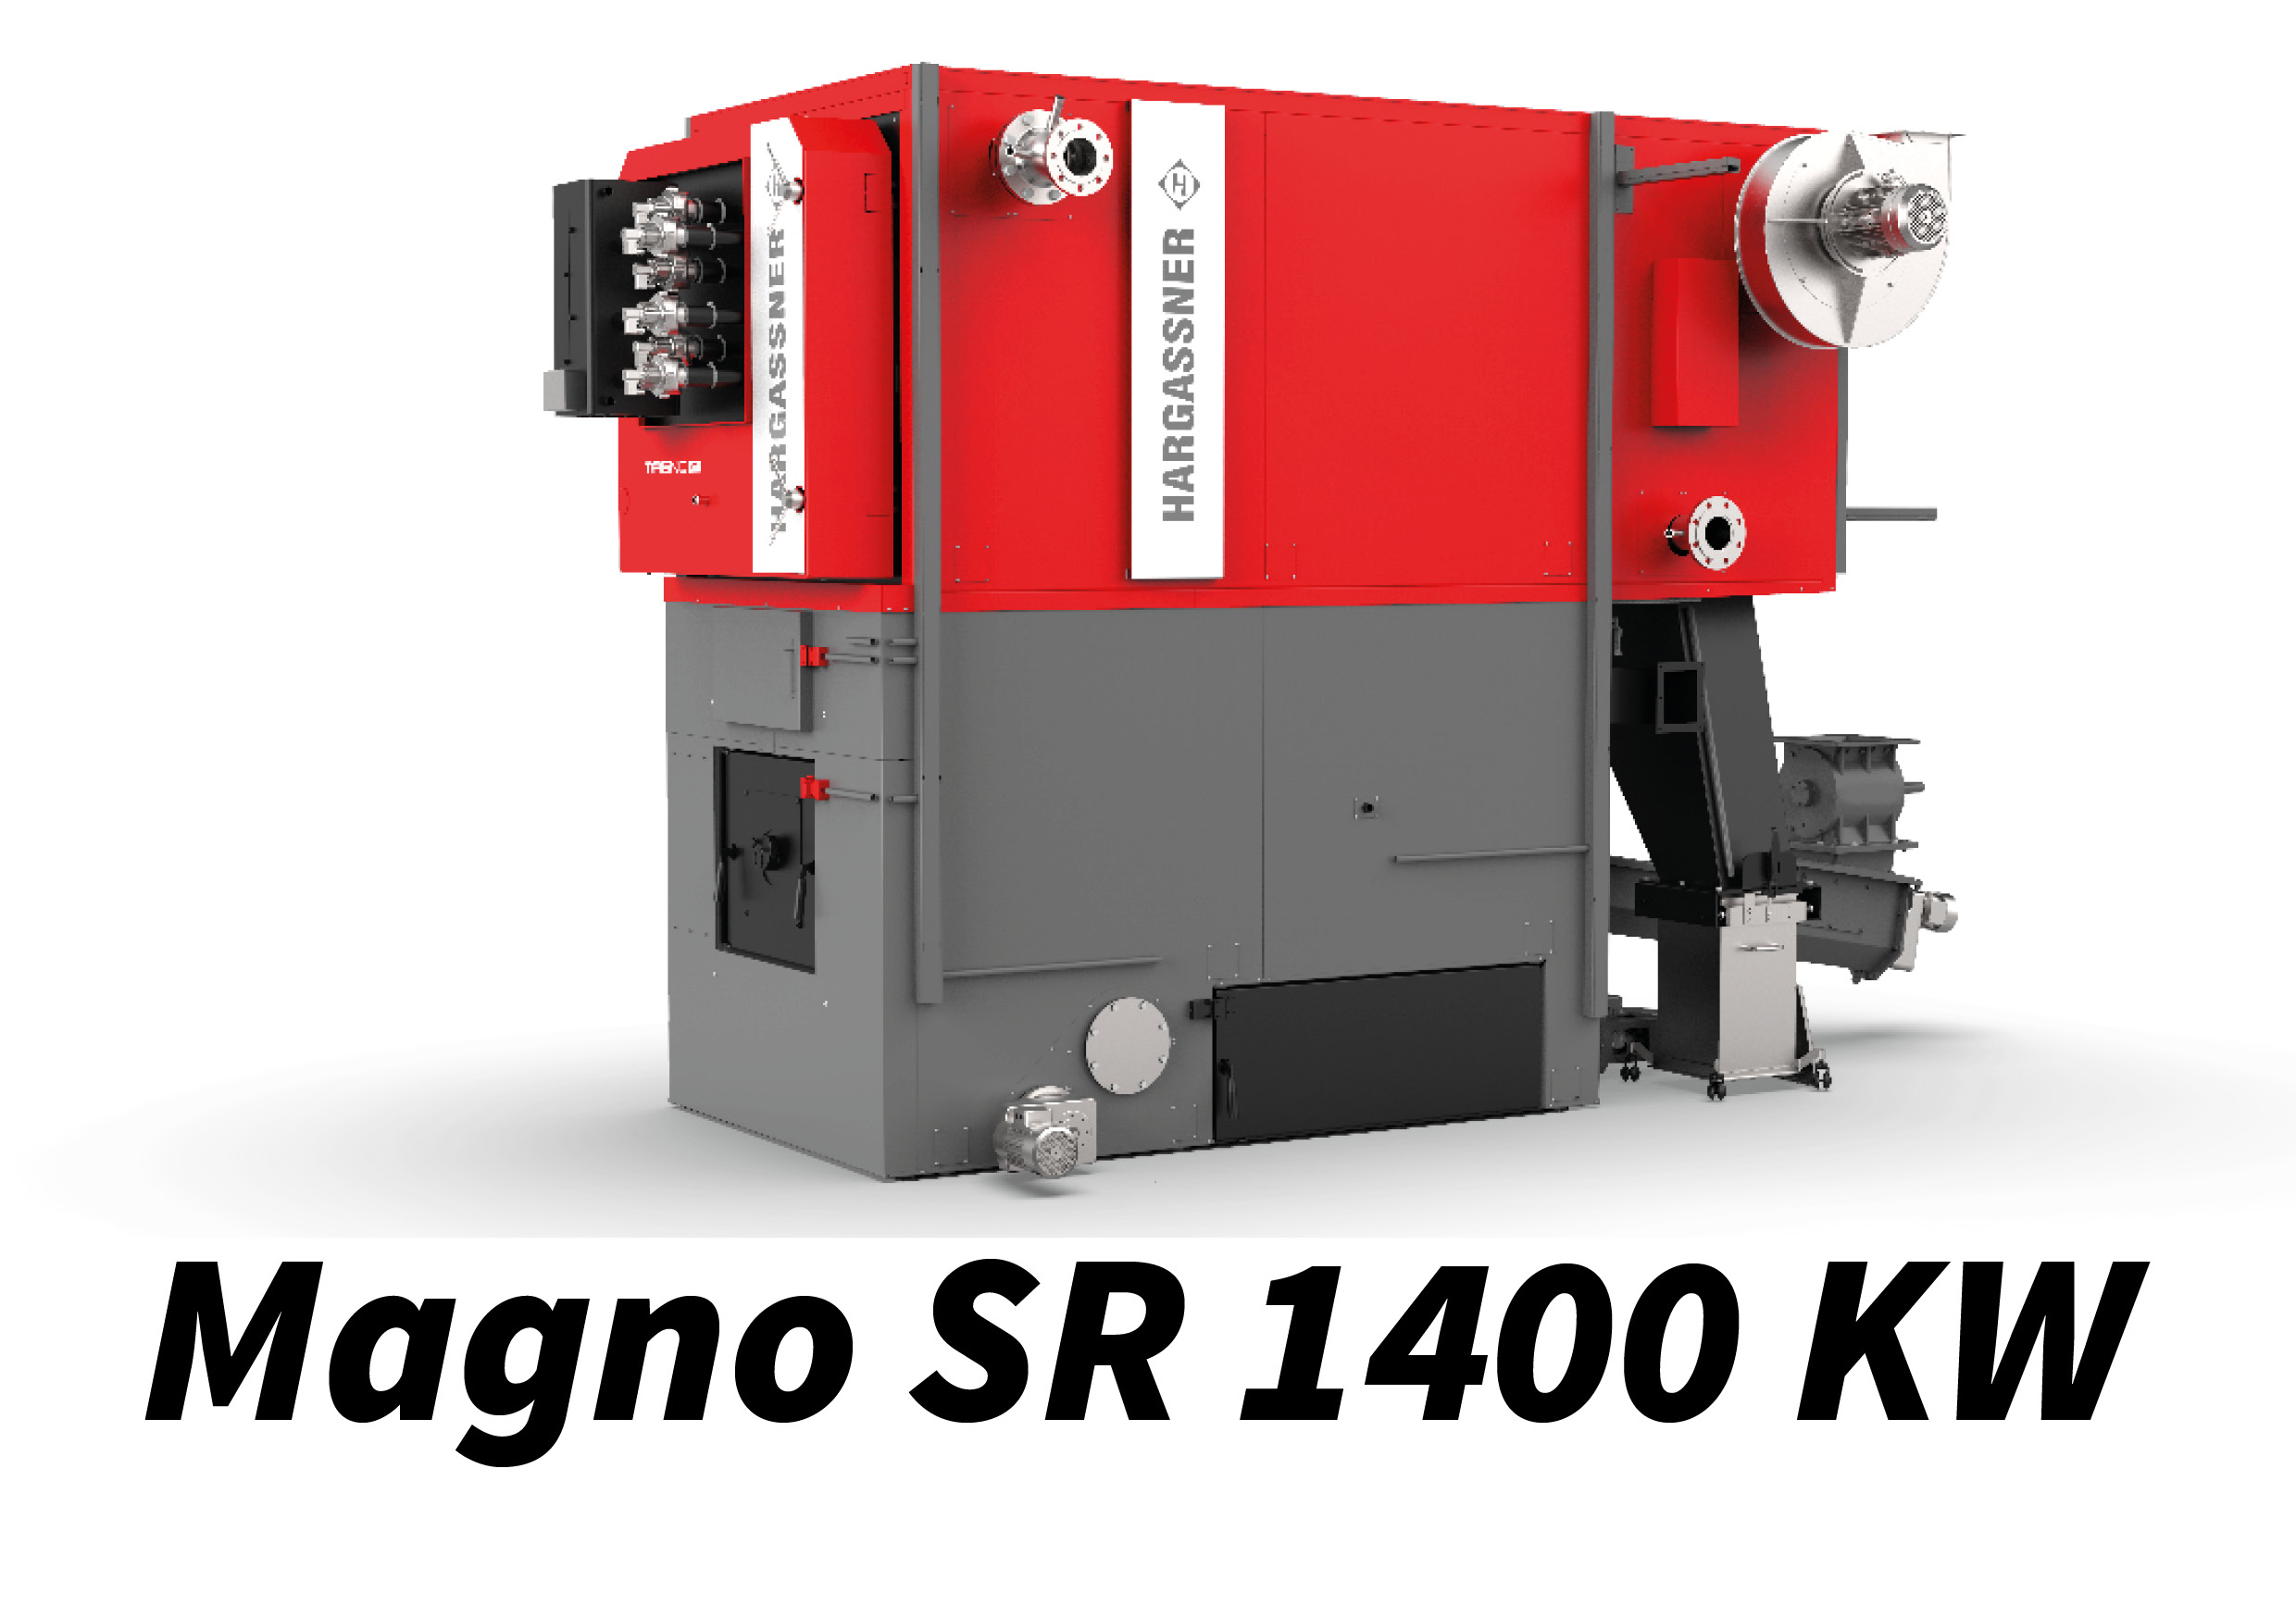 Magno SR 1400 kW